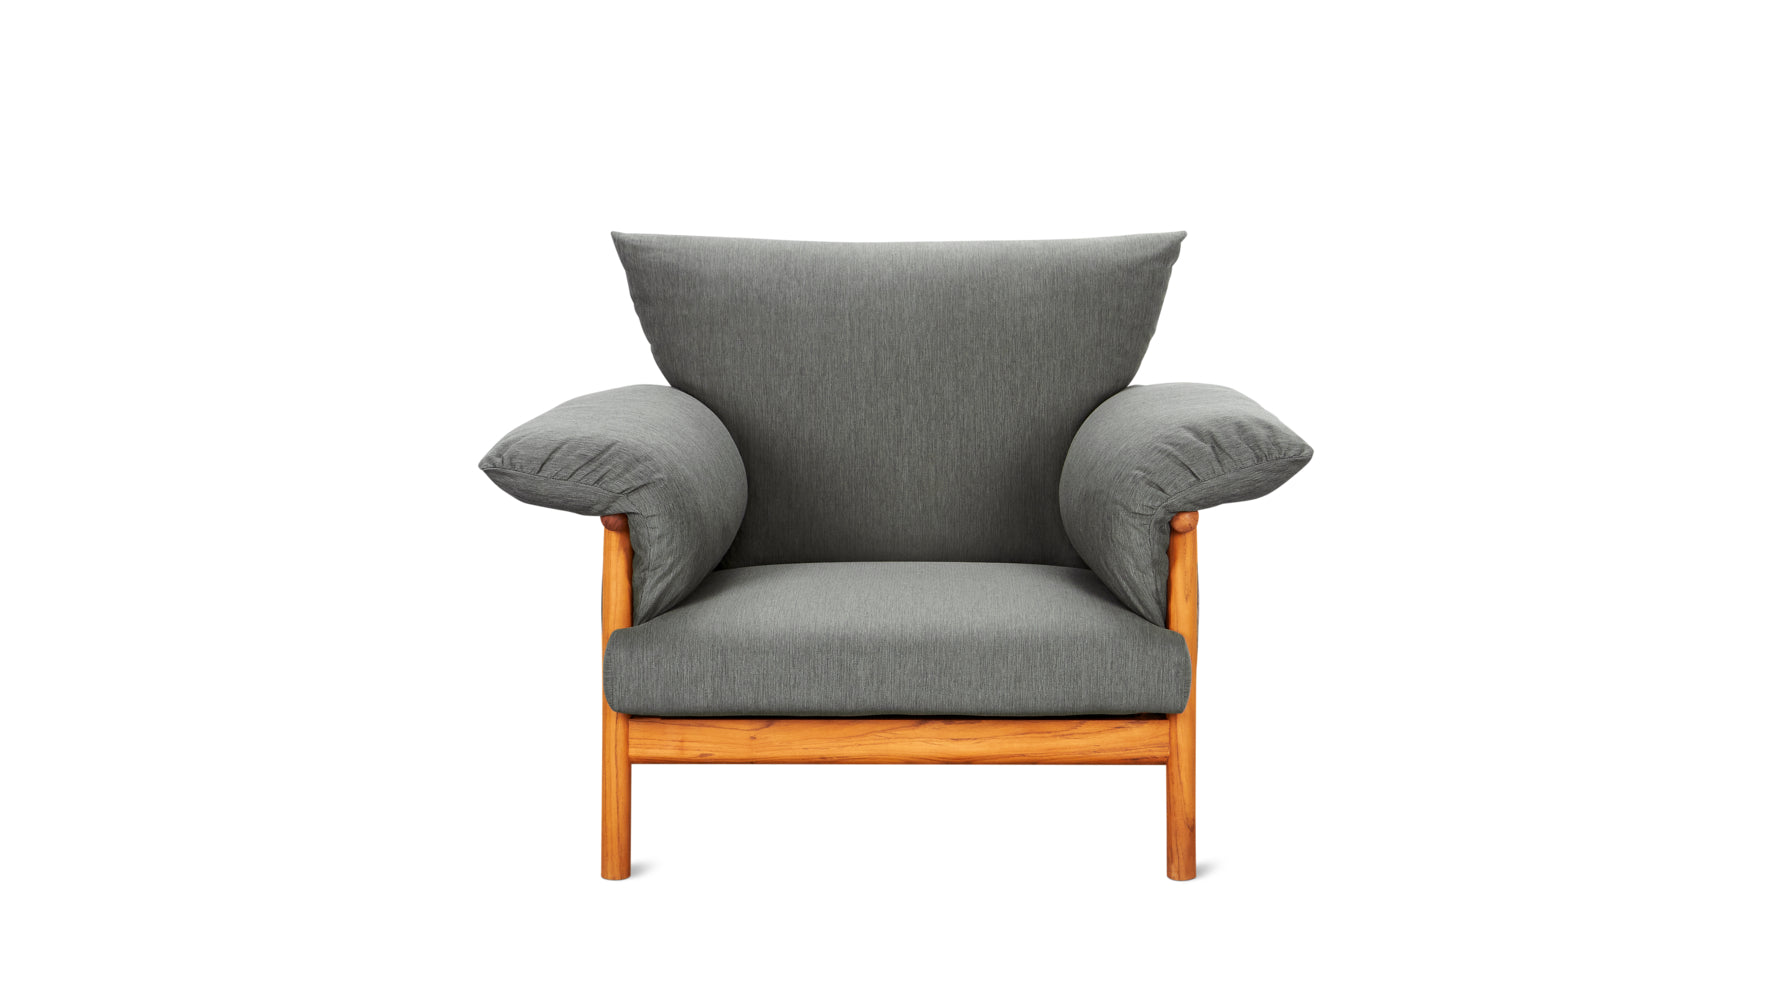 Pillow Talk Outdoor Lounge Chair, Pepper - Image 2